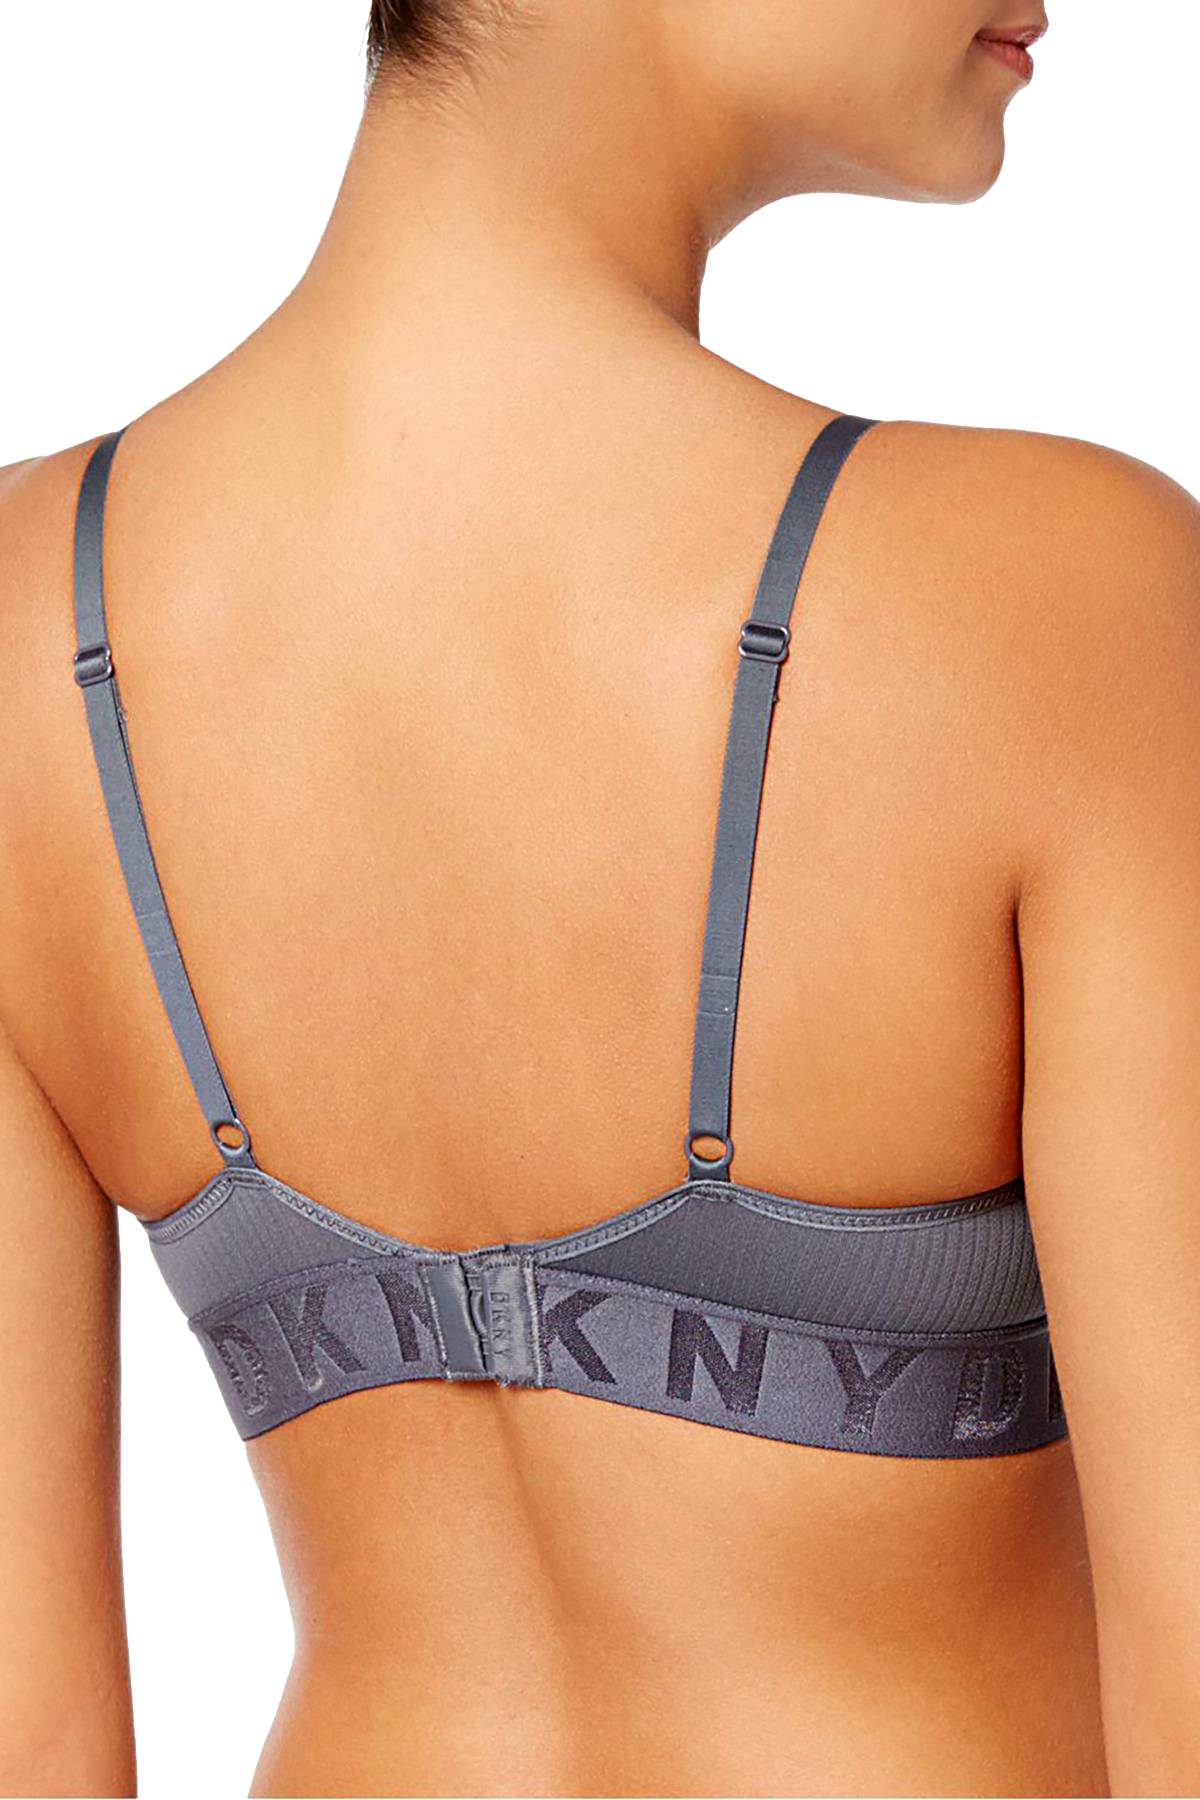 DKNY Graphite Litewear Seamless Ribbed Bralette